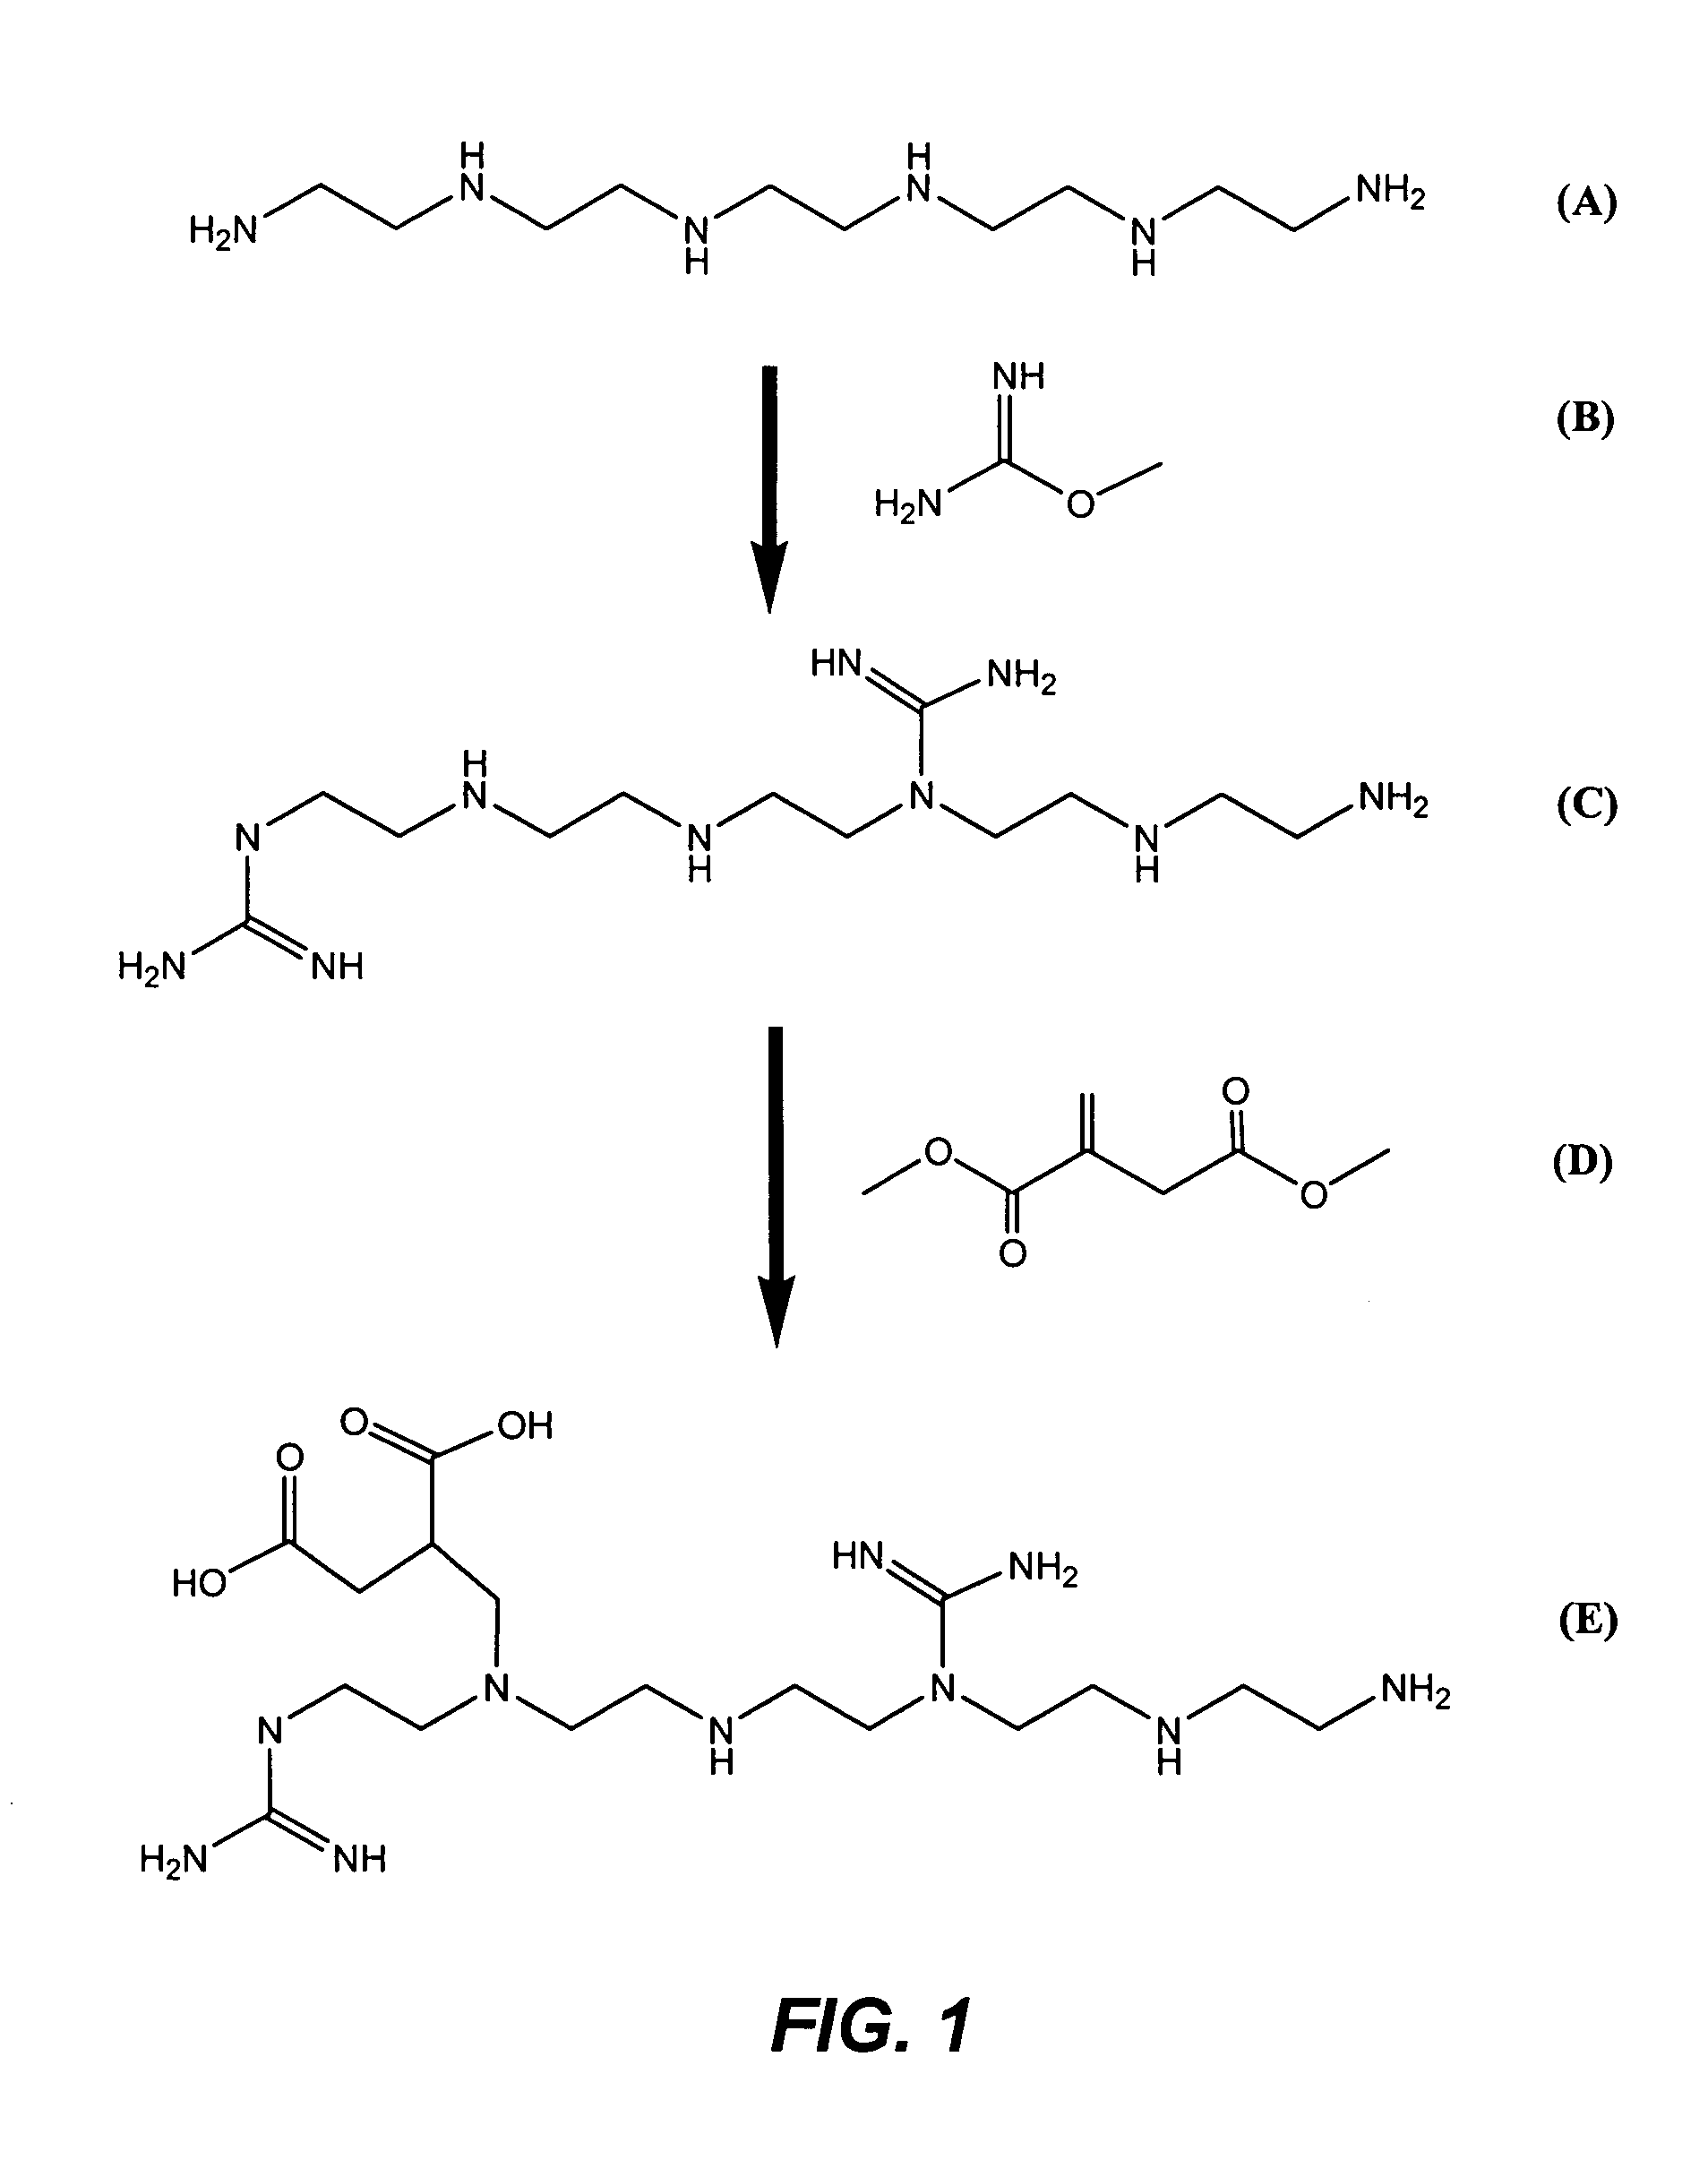 Carrier ampholytes of high pH range